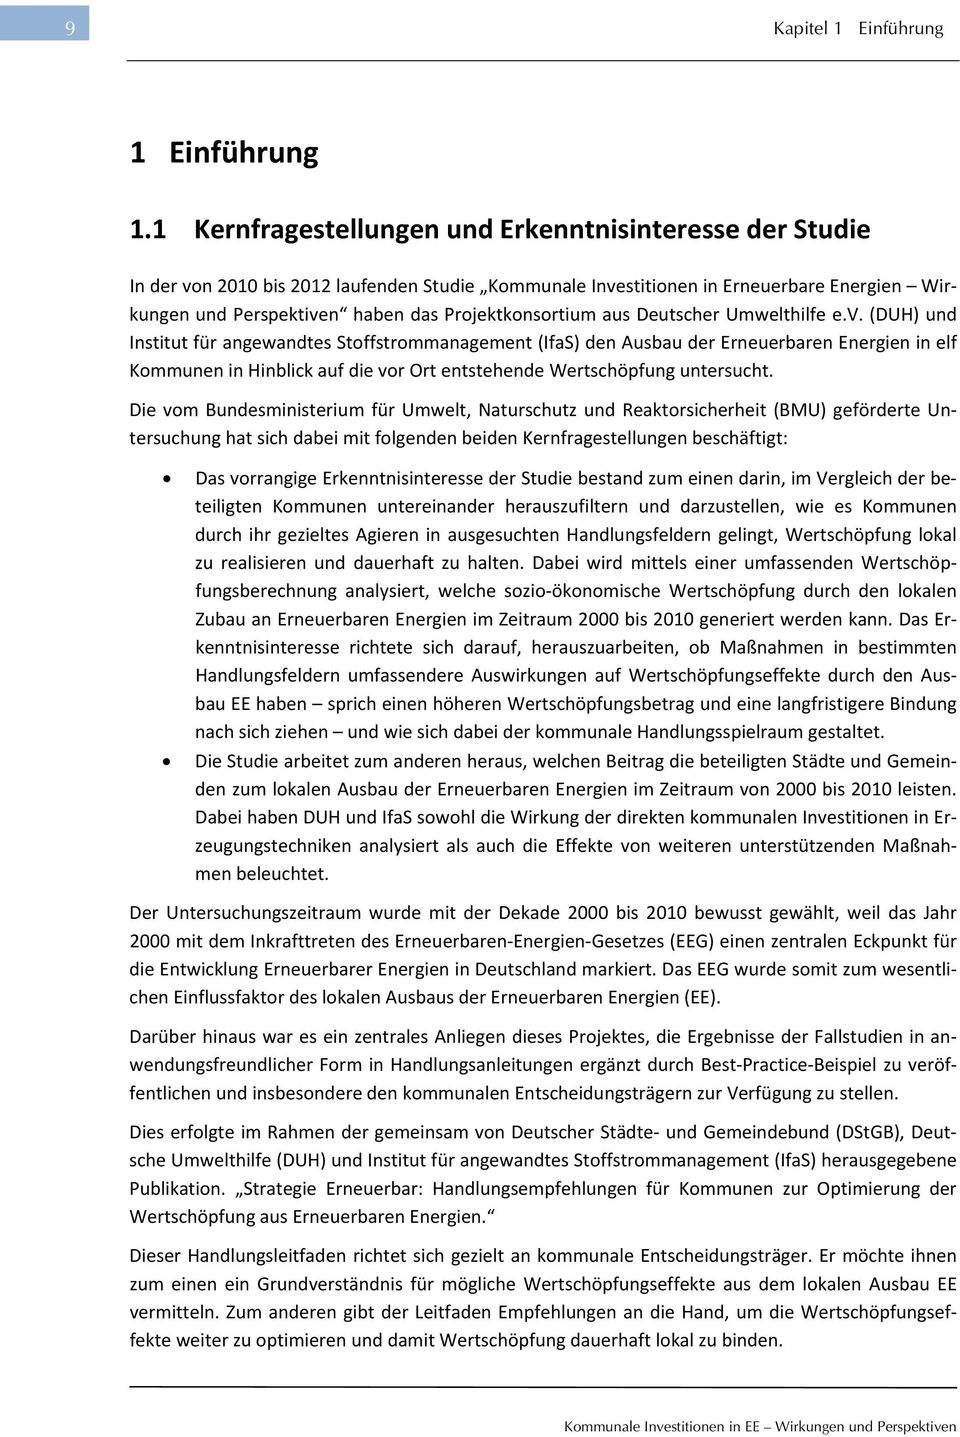 Projektkonsortium aus Deutscher Umwelthilfe e.v.